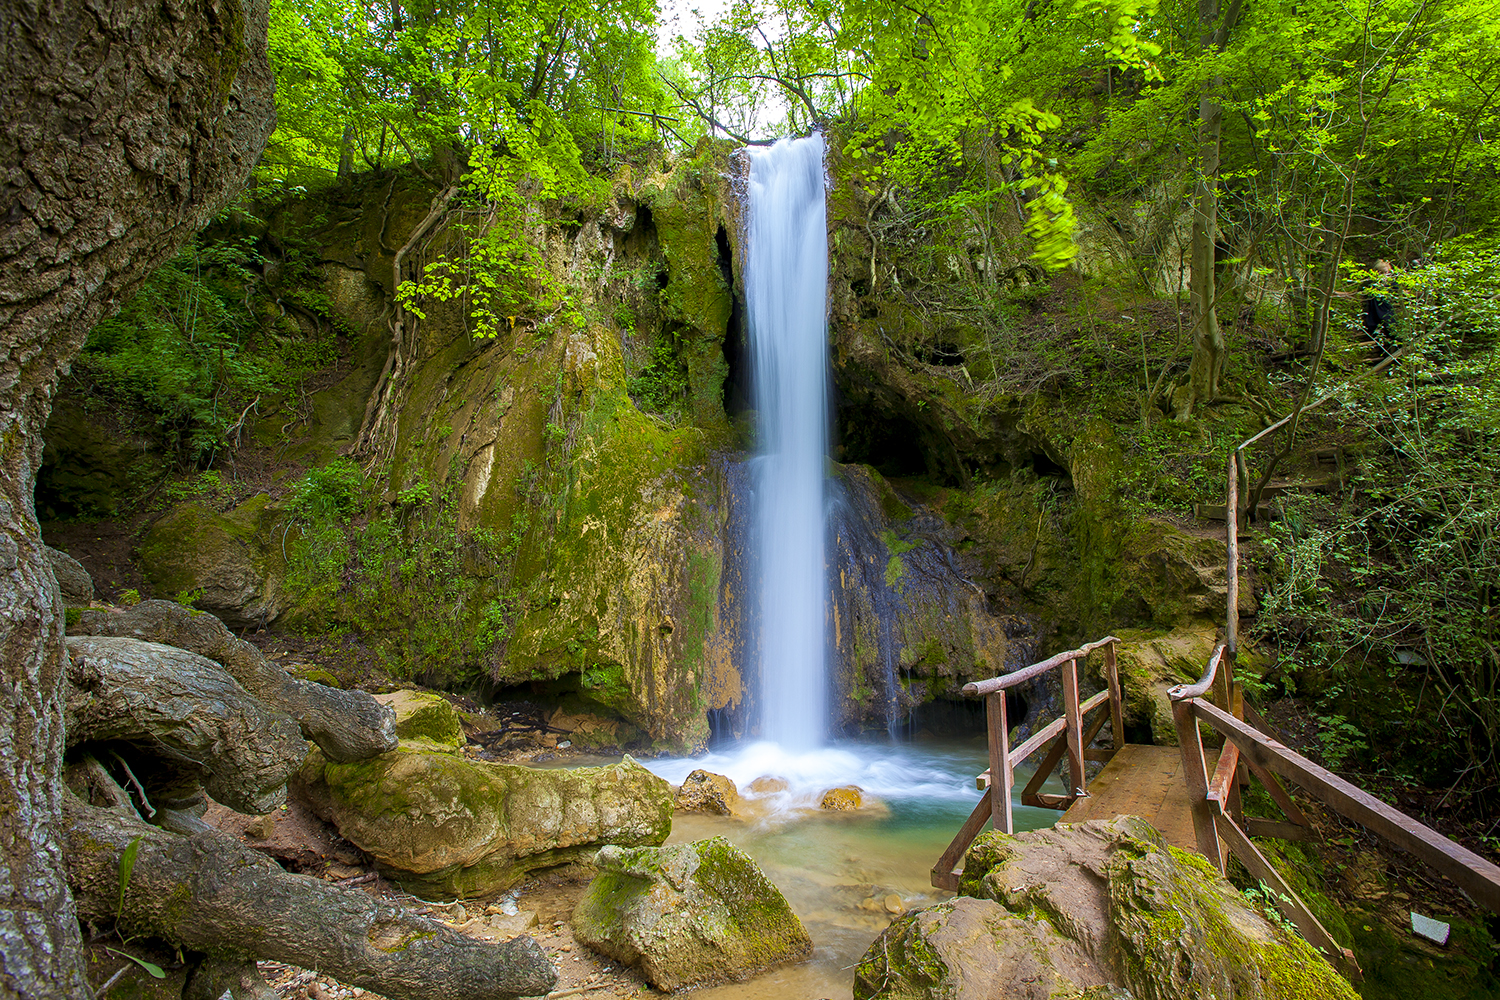 Ripaljka waterfall